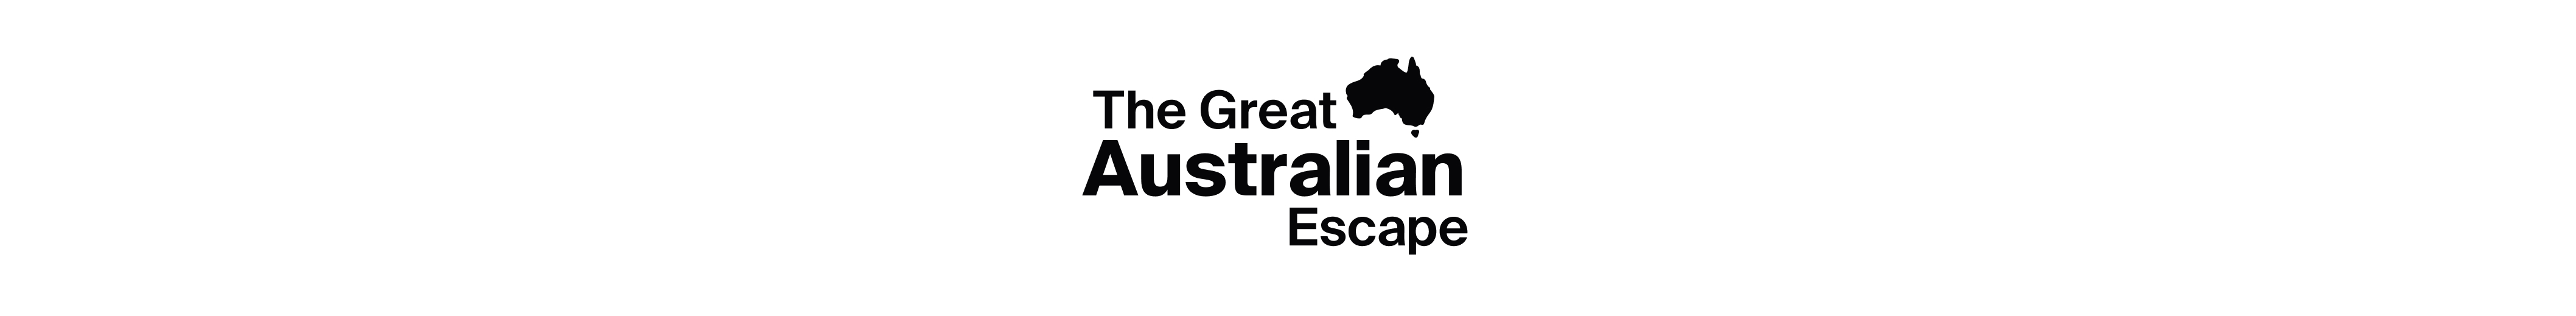 Great Australian Escapes 